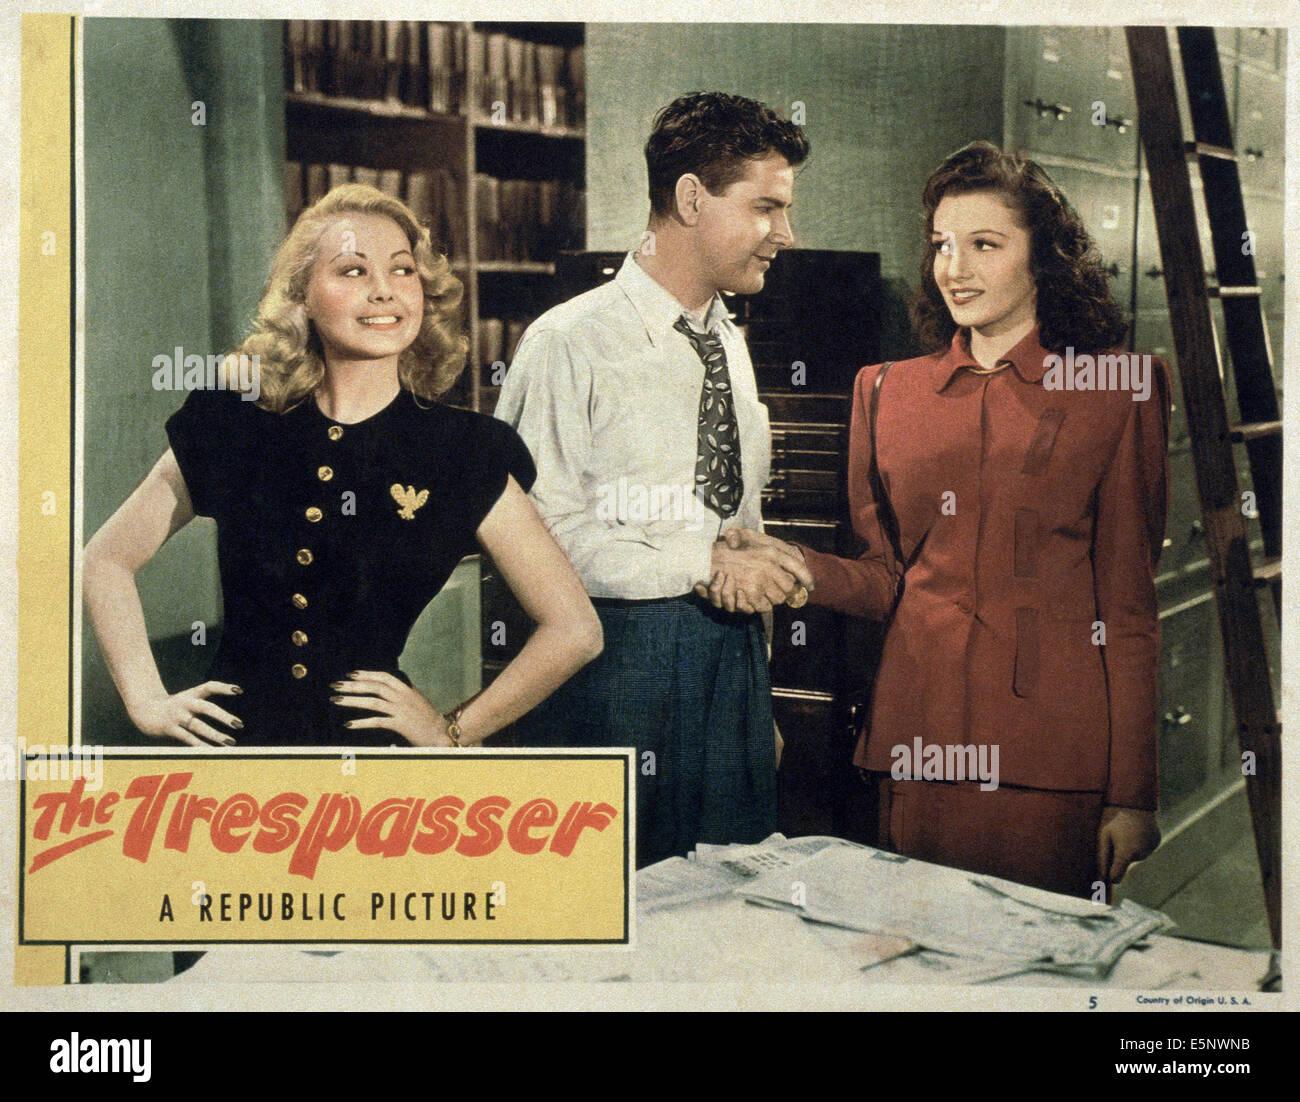 THE TRESPASSER, US lobbycard, from left: Adele Mara, Warren Douglas, Janet Martin, 1947 Stock Photo